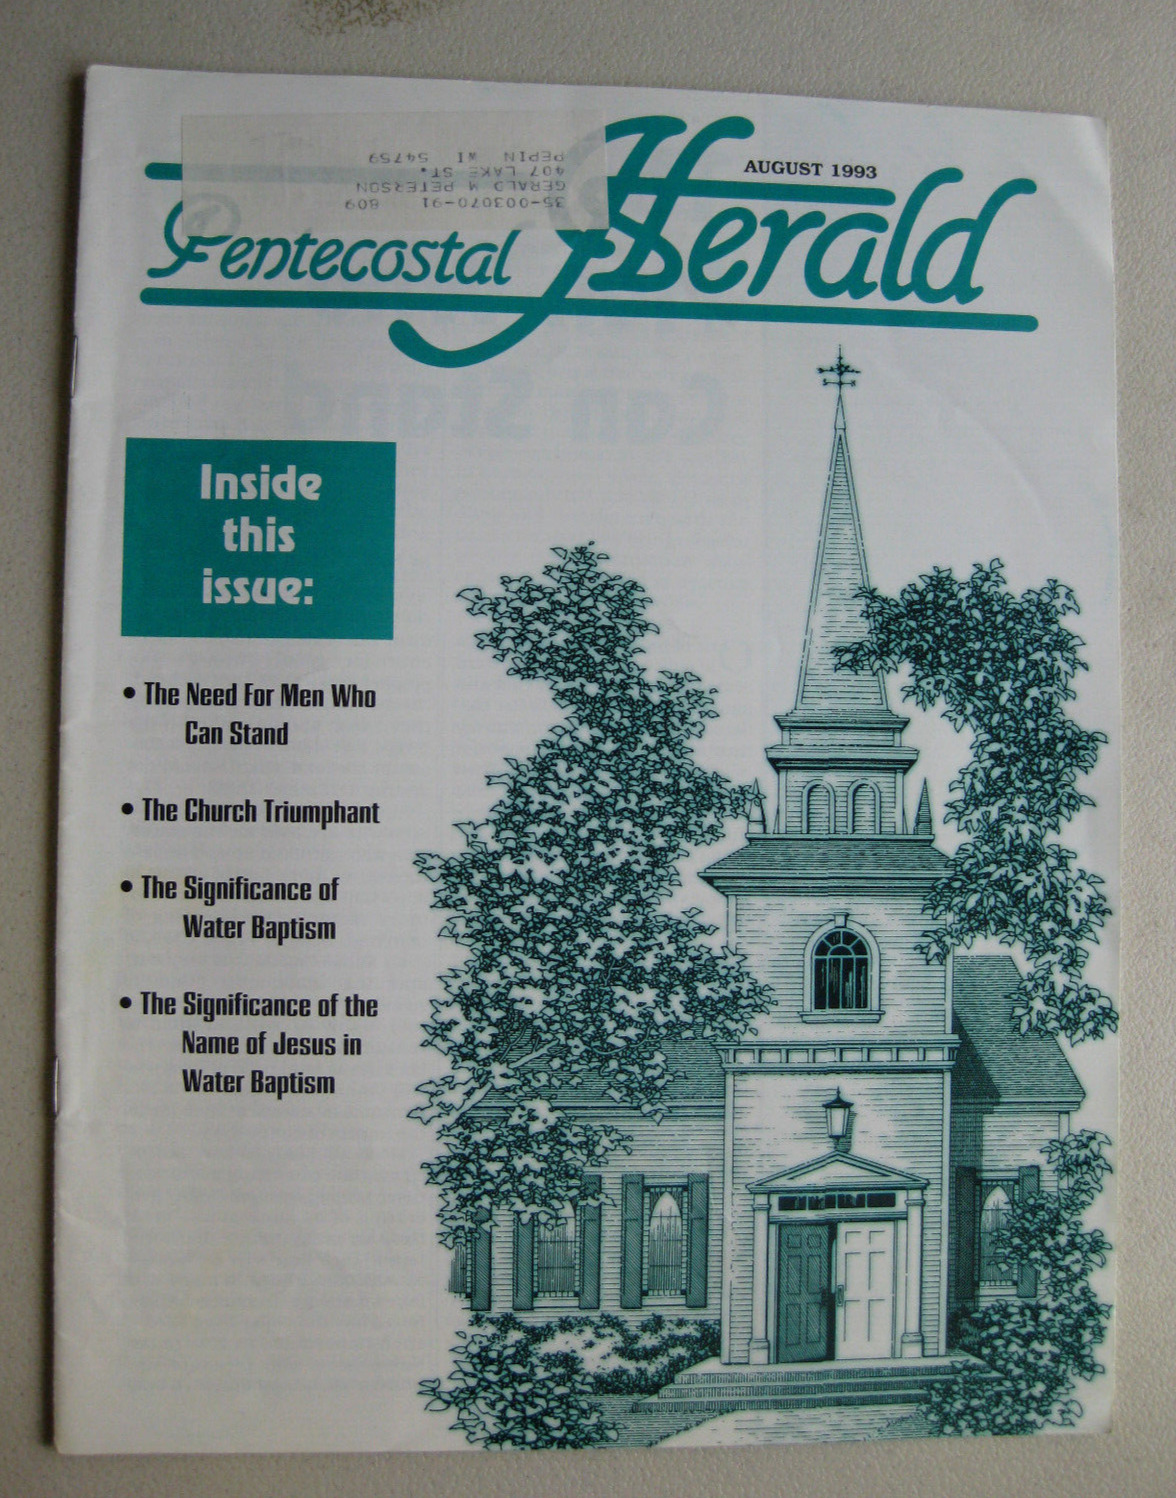 Pentecostal Herald * UPC * August 1993 * Very Good Condition